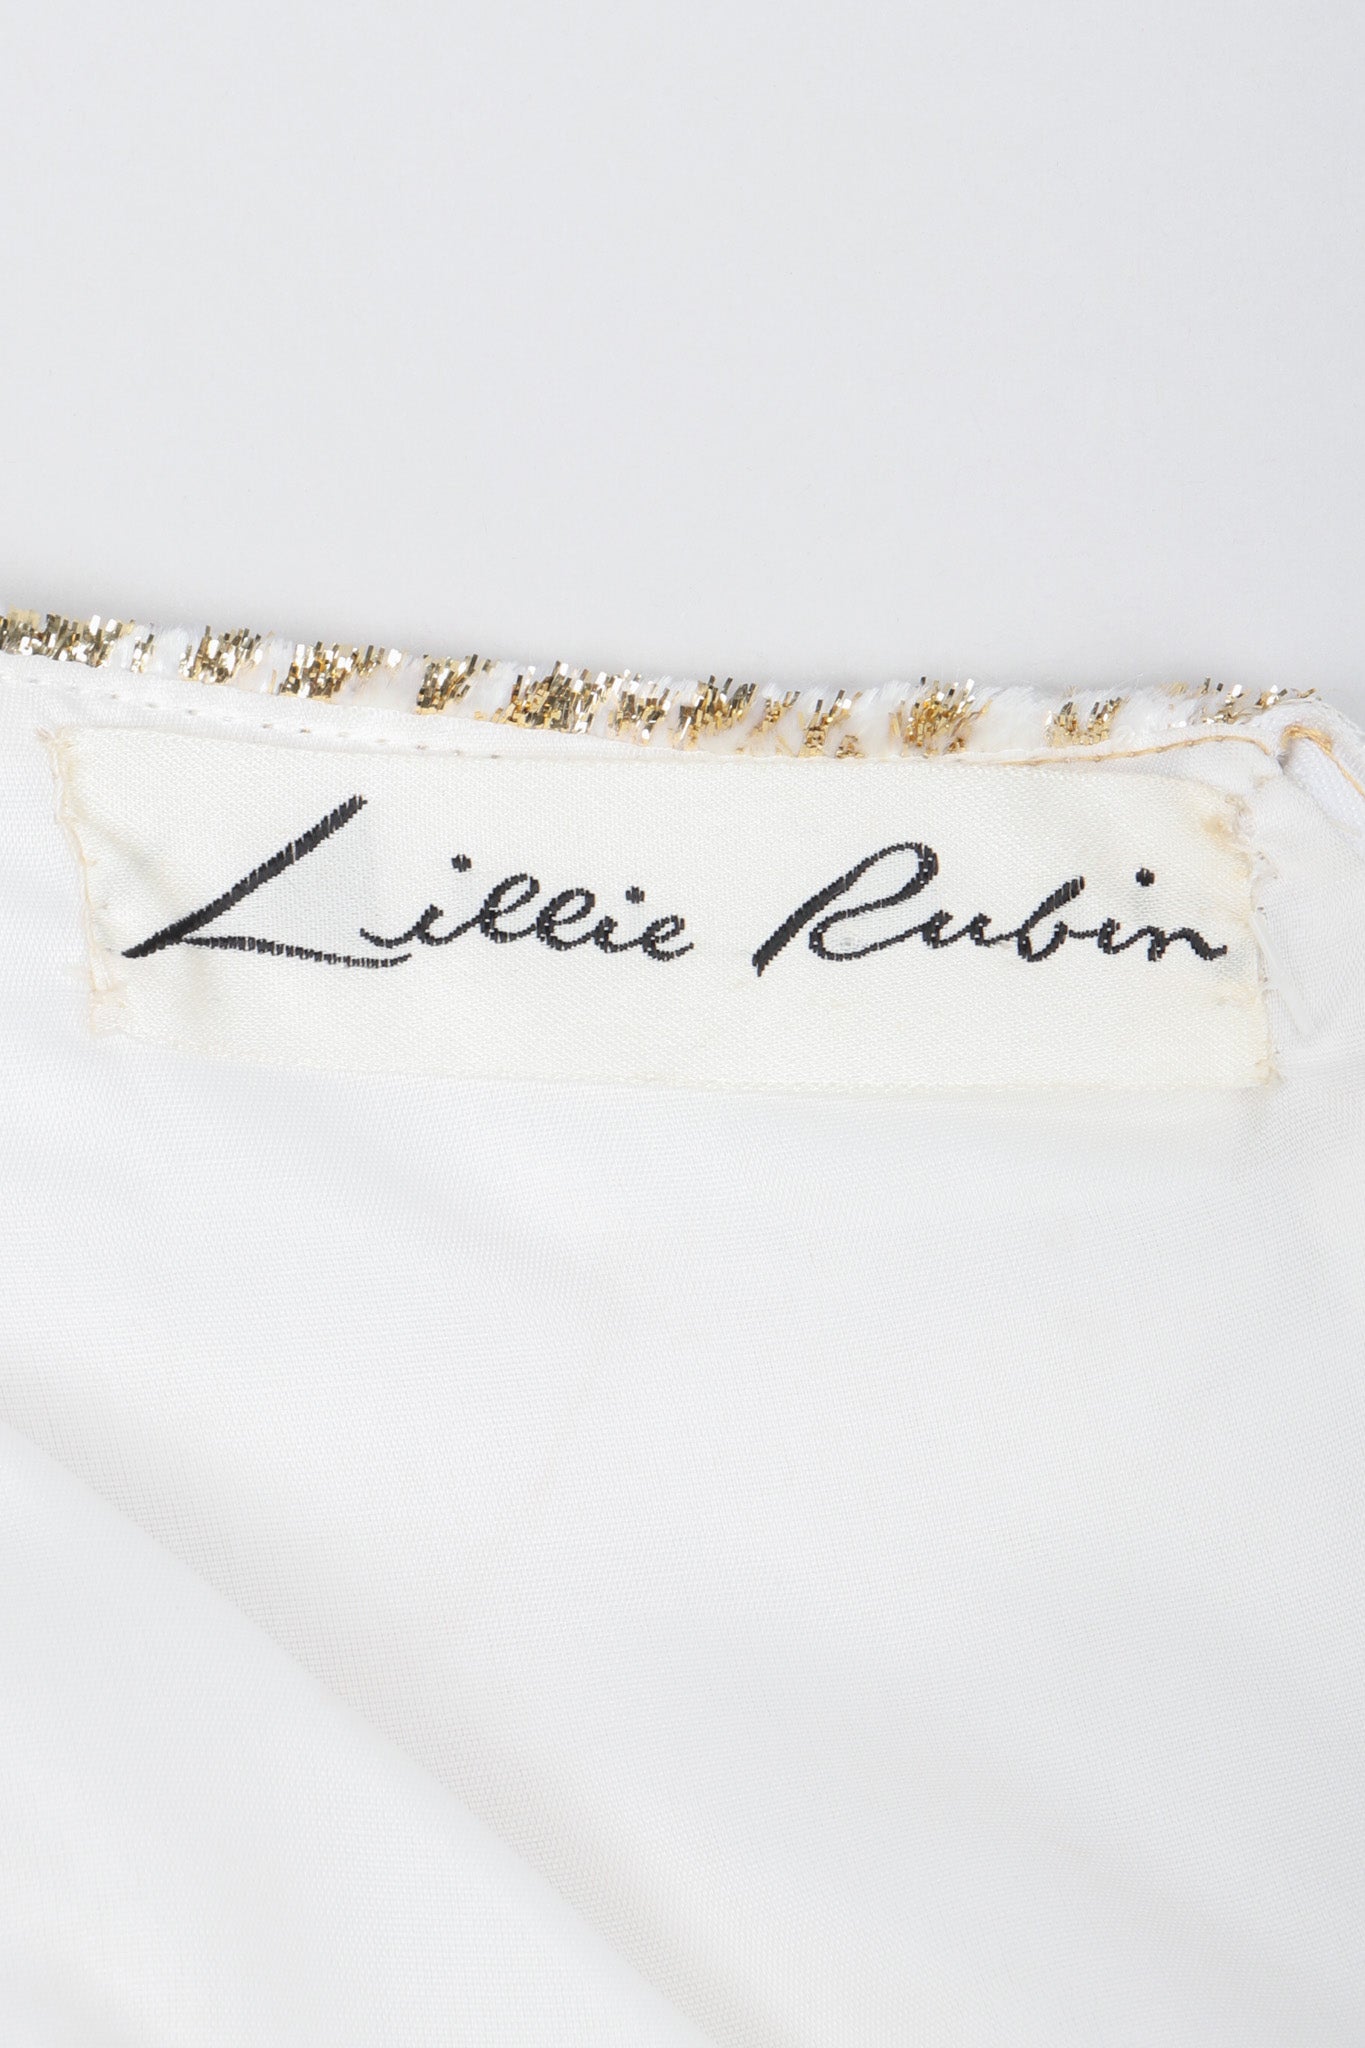 Recess Los Angeles Vintage Lillie Rubin Golden Velvet Lamé Sweetheart Sheath